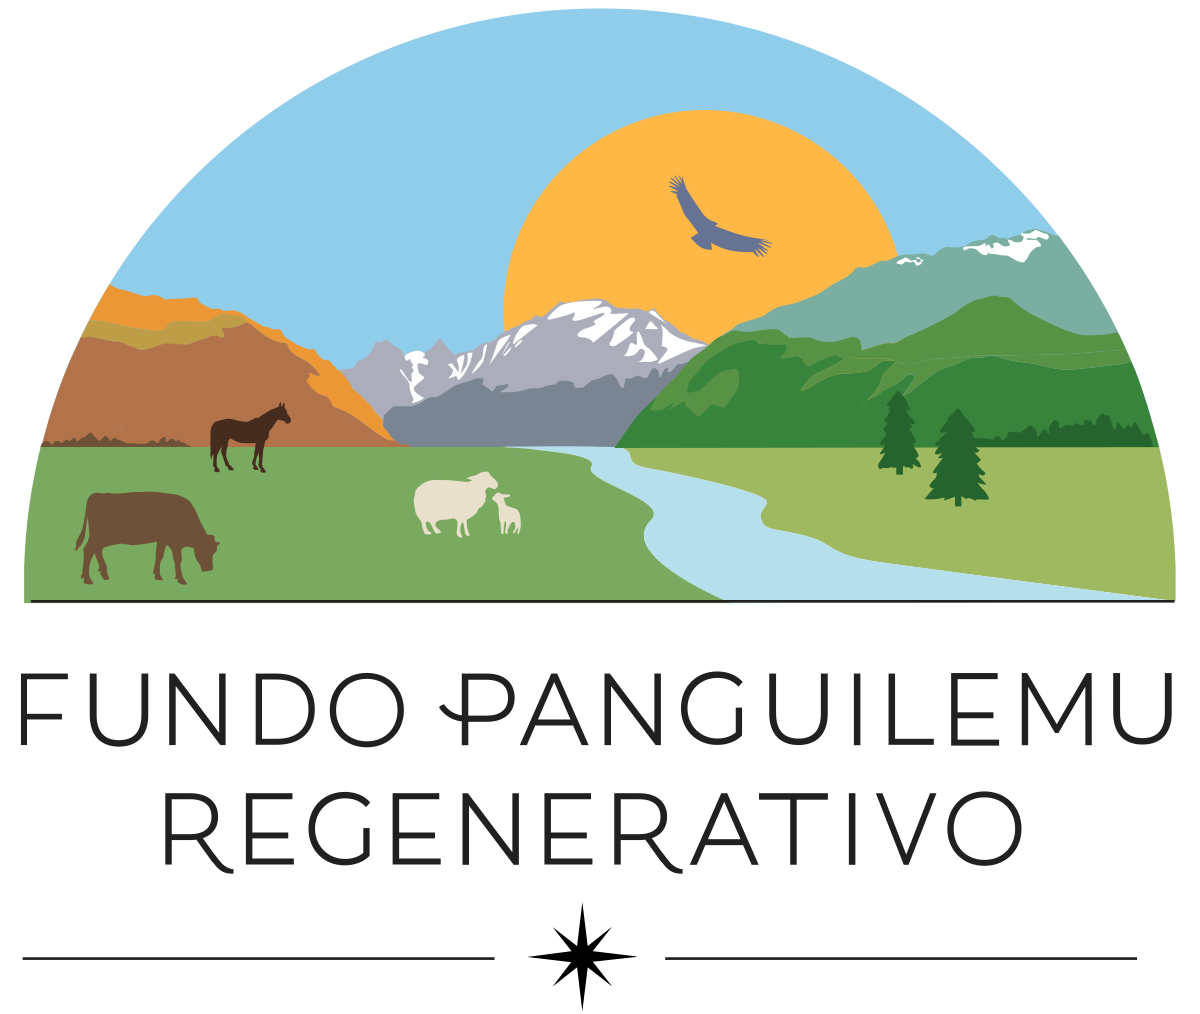 Fundo Panguilemu